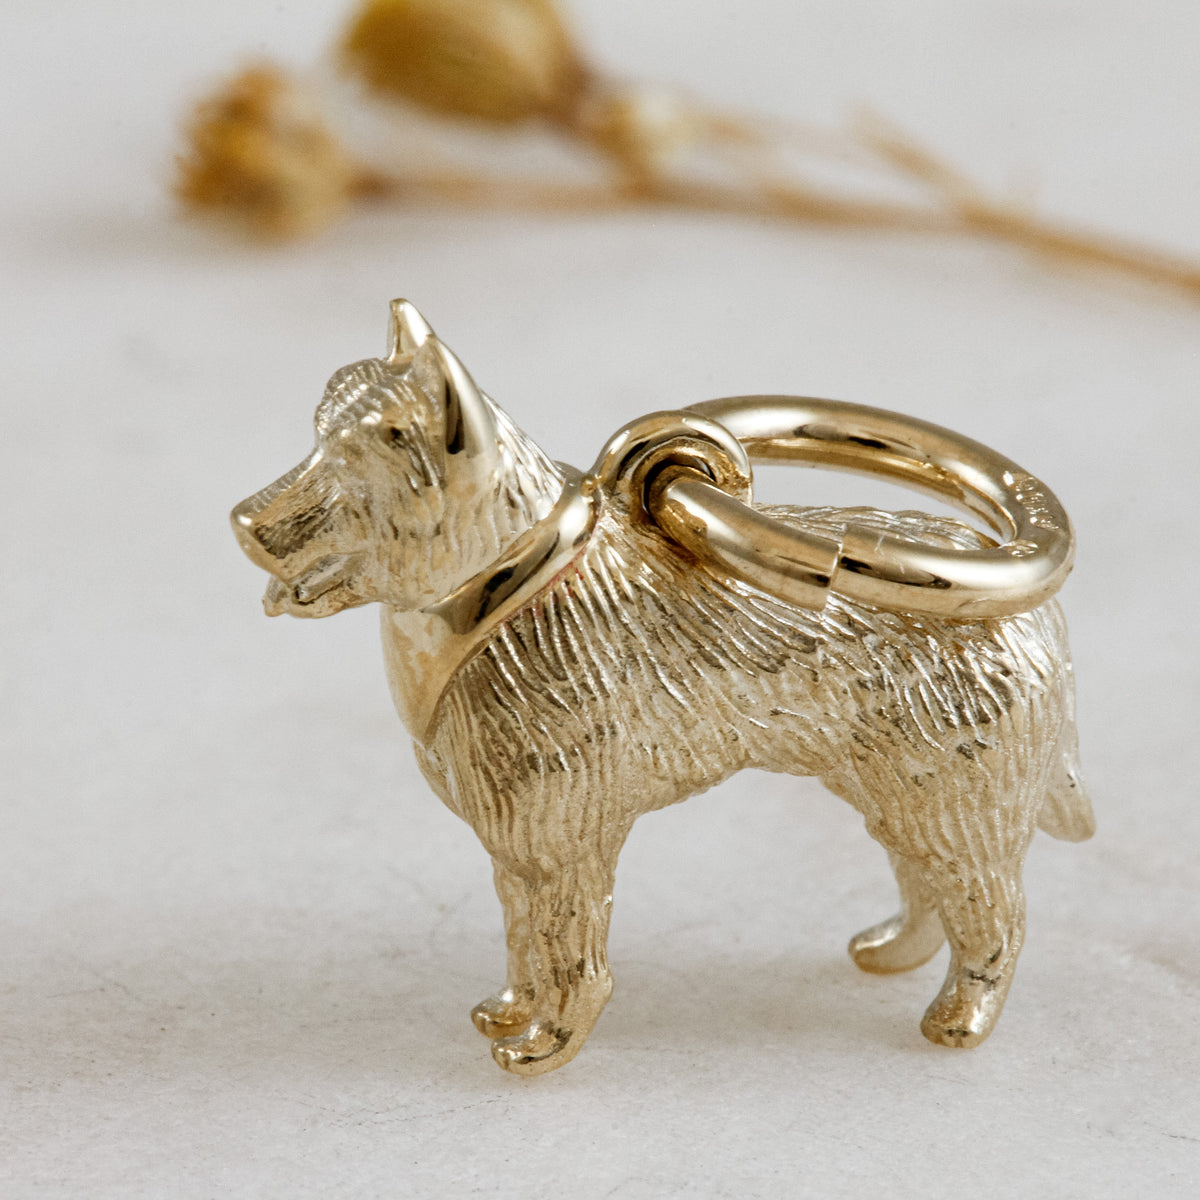 german shepherd solid gold dog charm for a necklace or bracelet